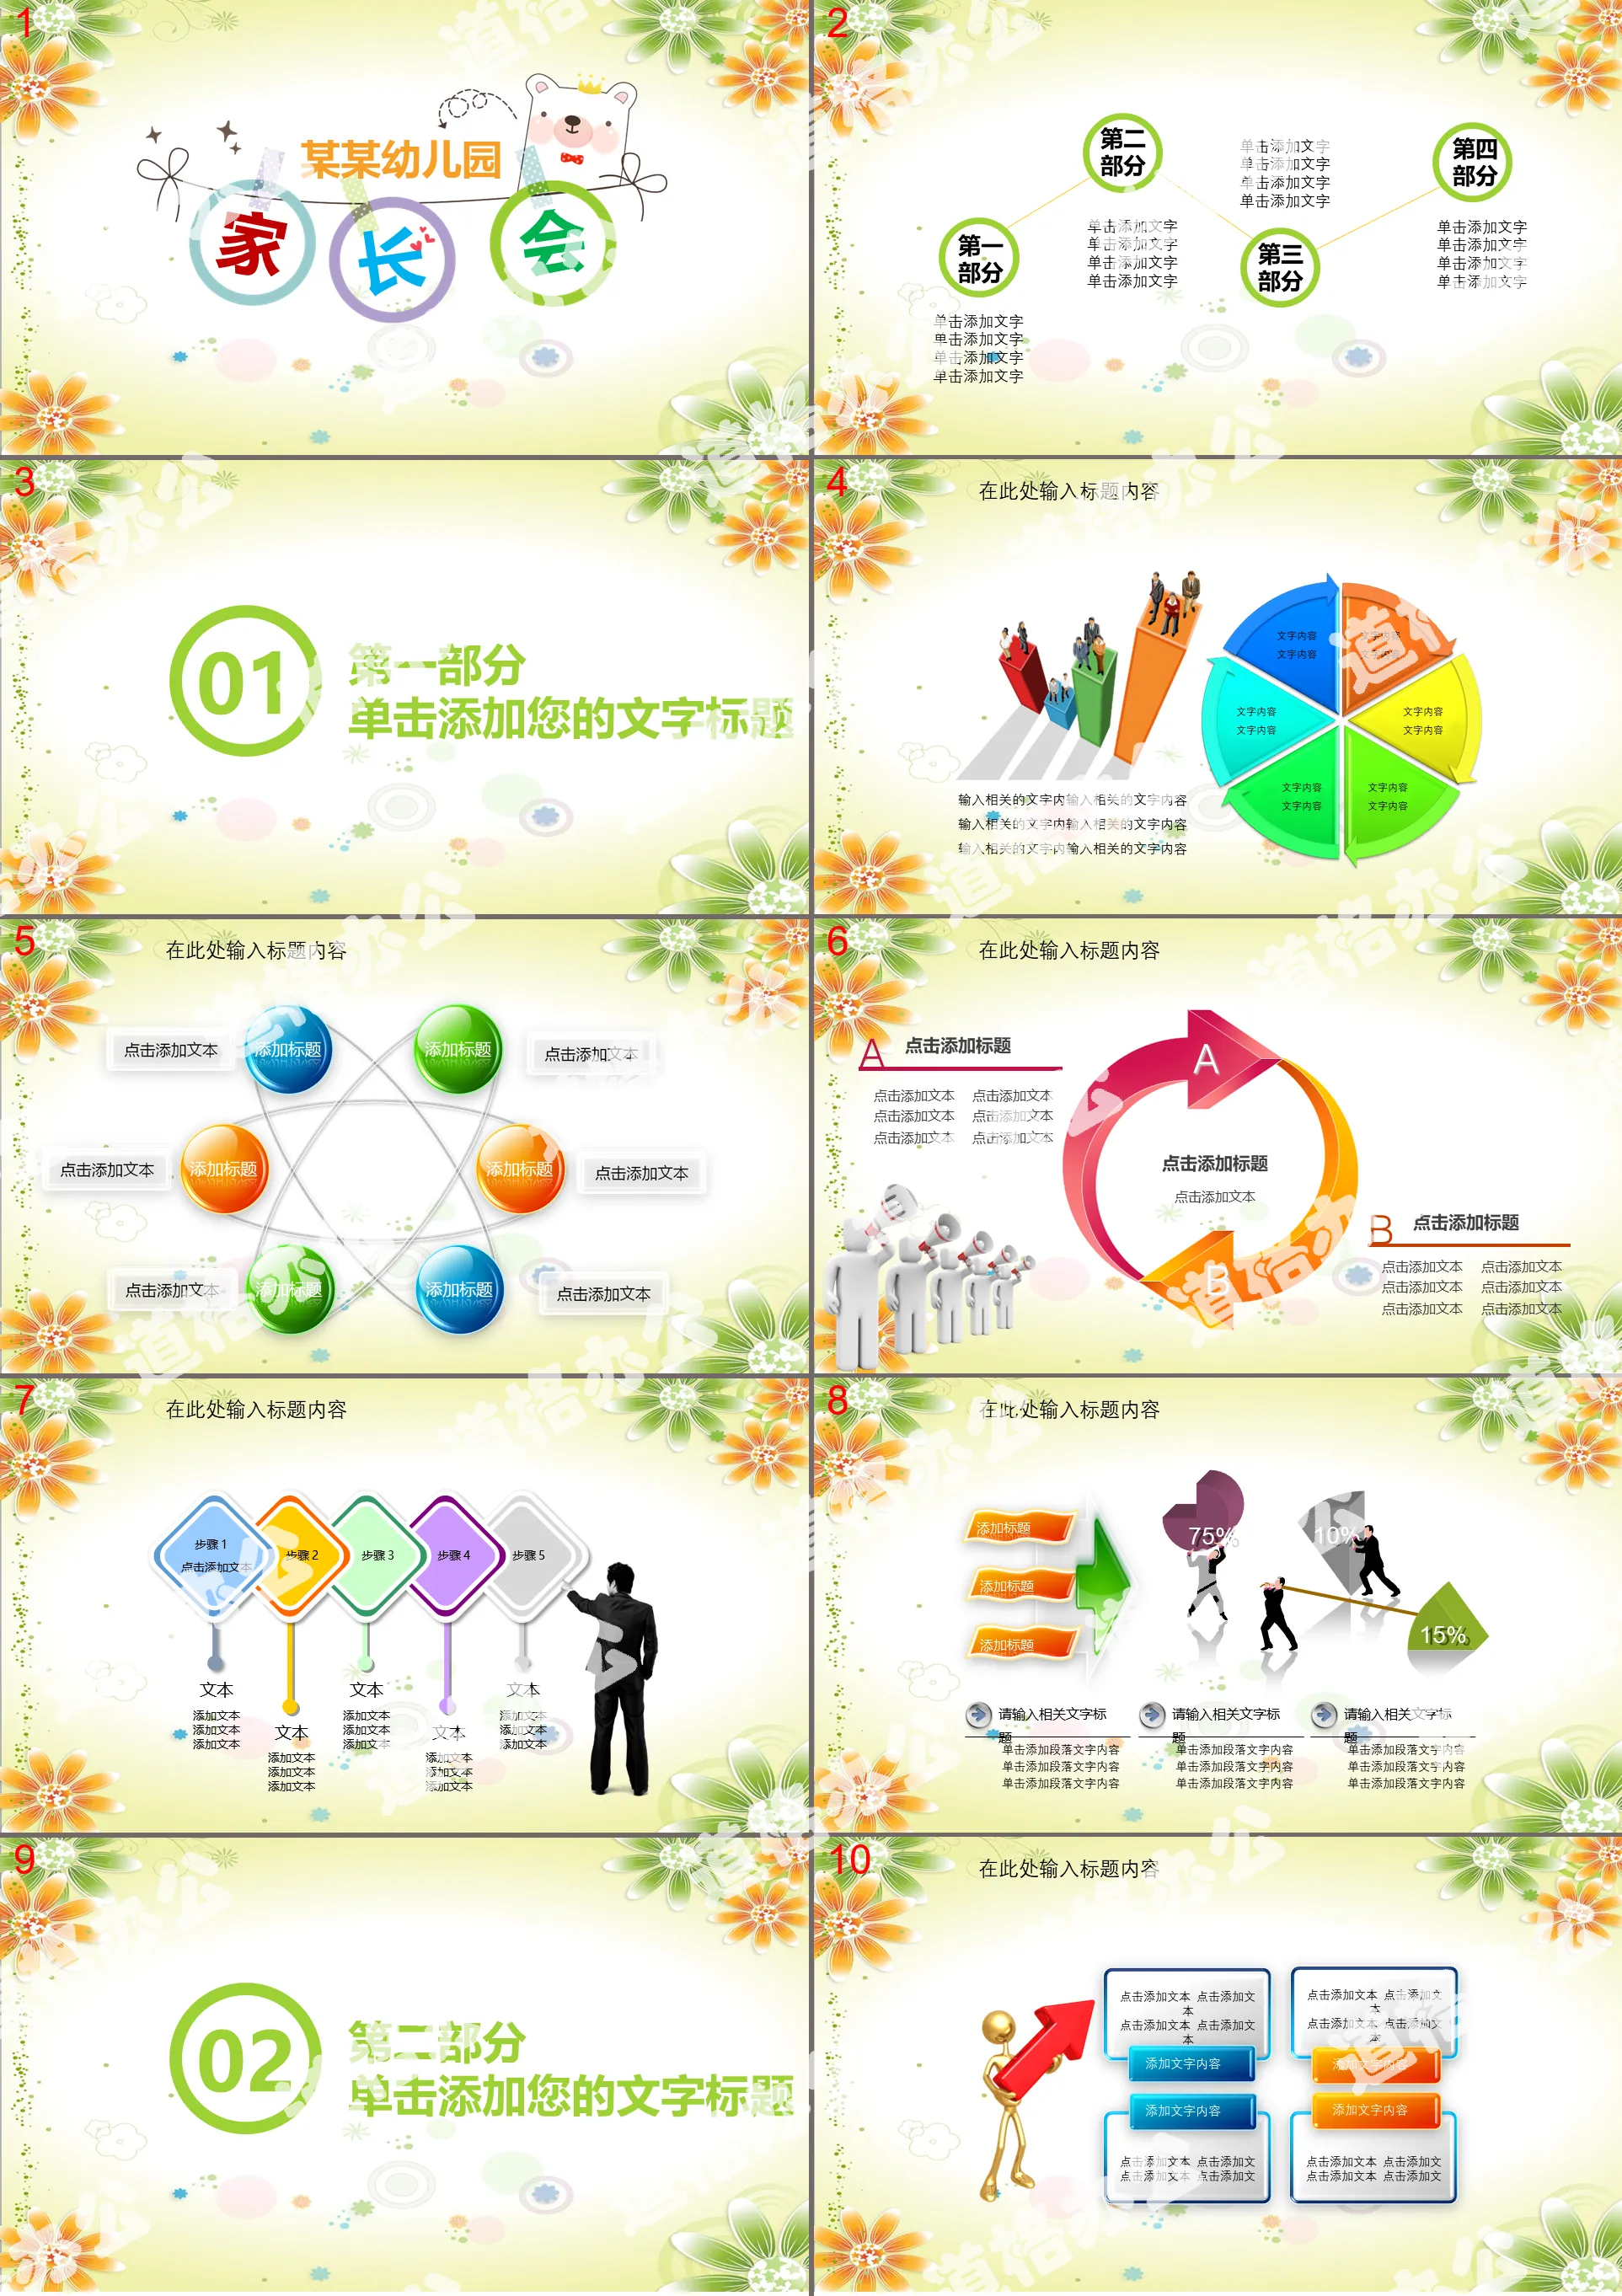 Kindergarten parent meeting PPT template with cartoon flower background